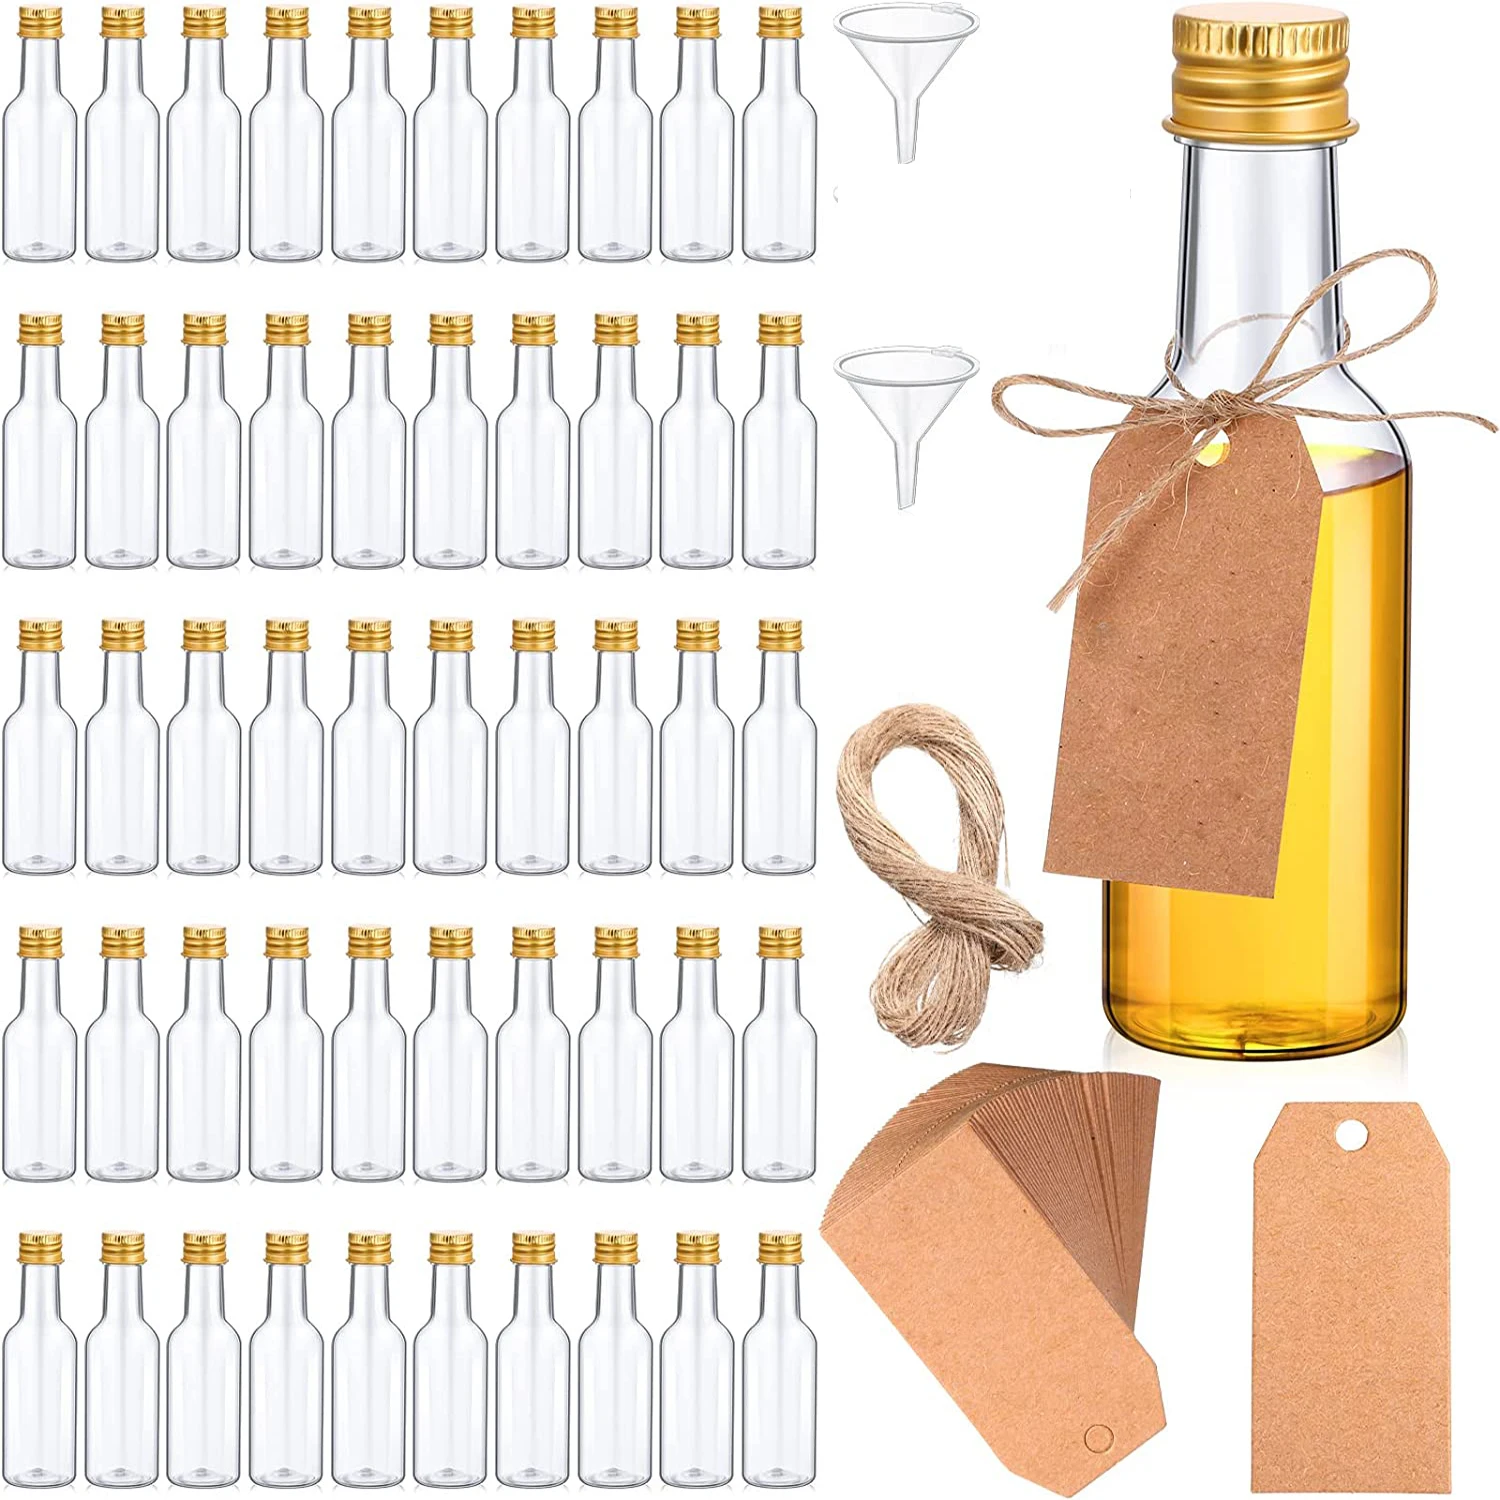 

30 Pcs 50ml Mini Plastic Liquor Bottles Set, Spirit Bottles Alcohol Shot Bottles with Caps,Kraft Tags with Ropes for Party